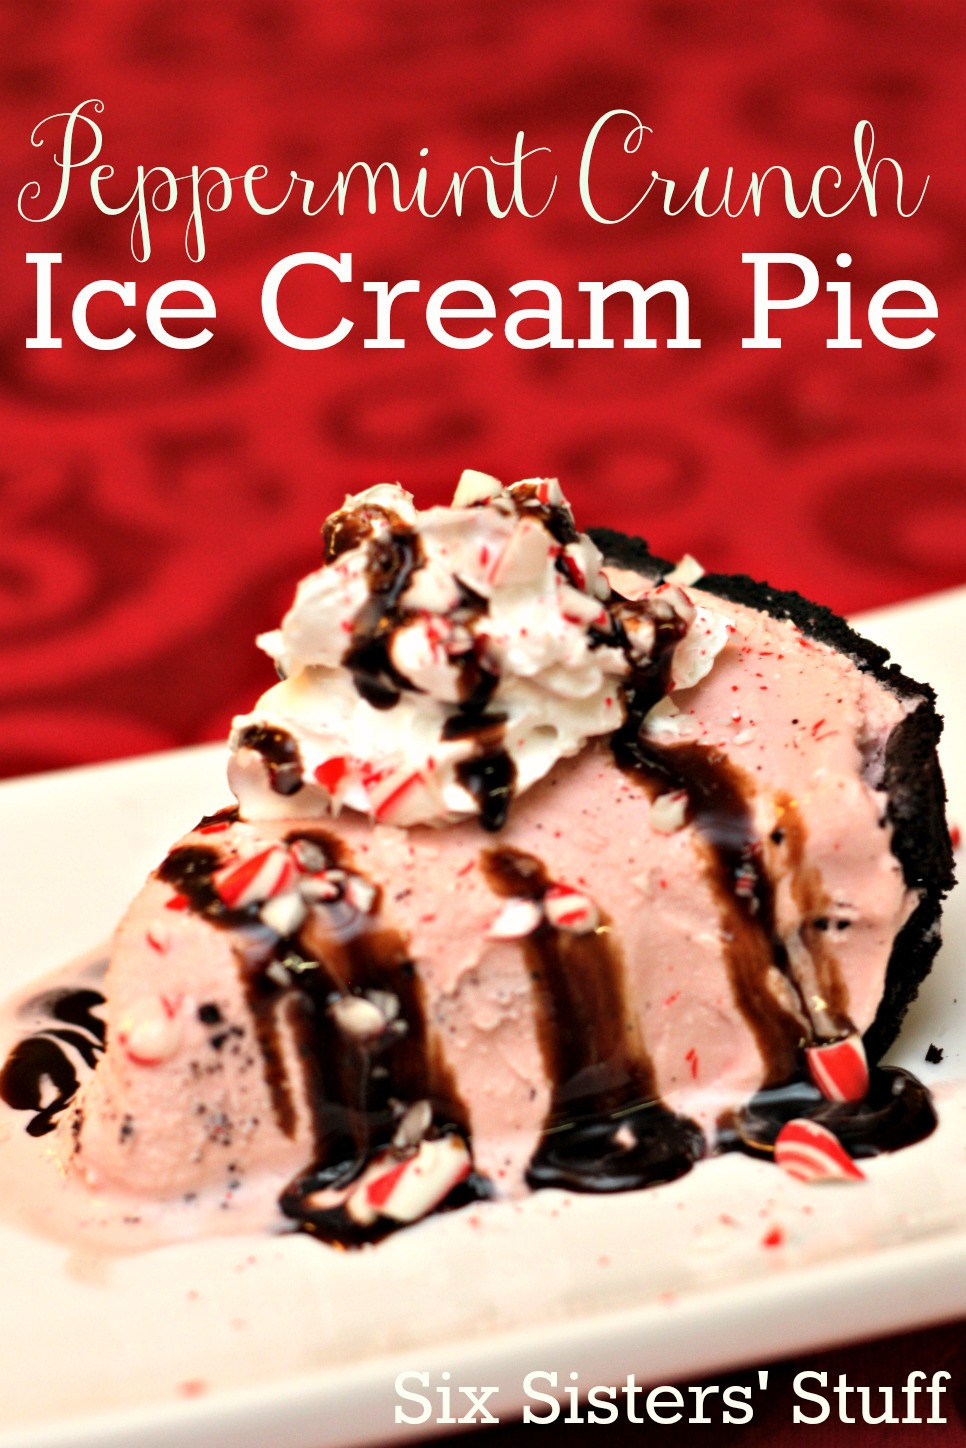 Ice Cream Pie Recipe
 Peppermint Crunch Ice Cream Pie